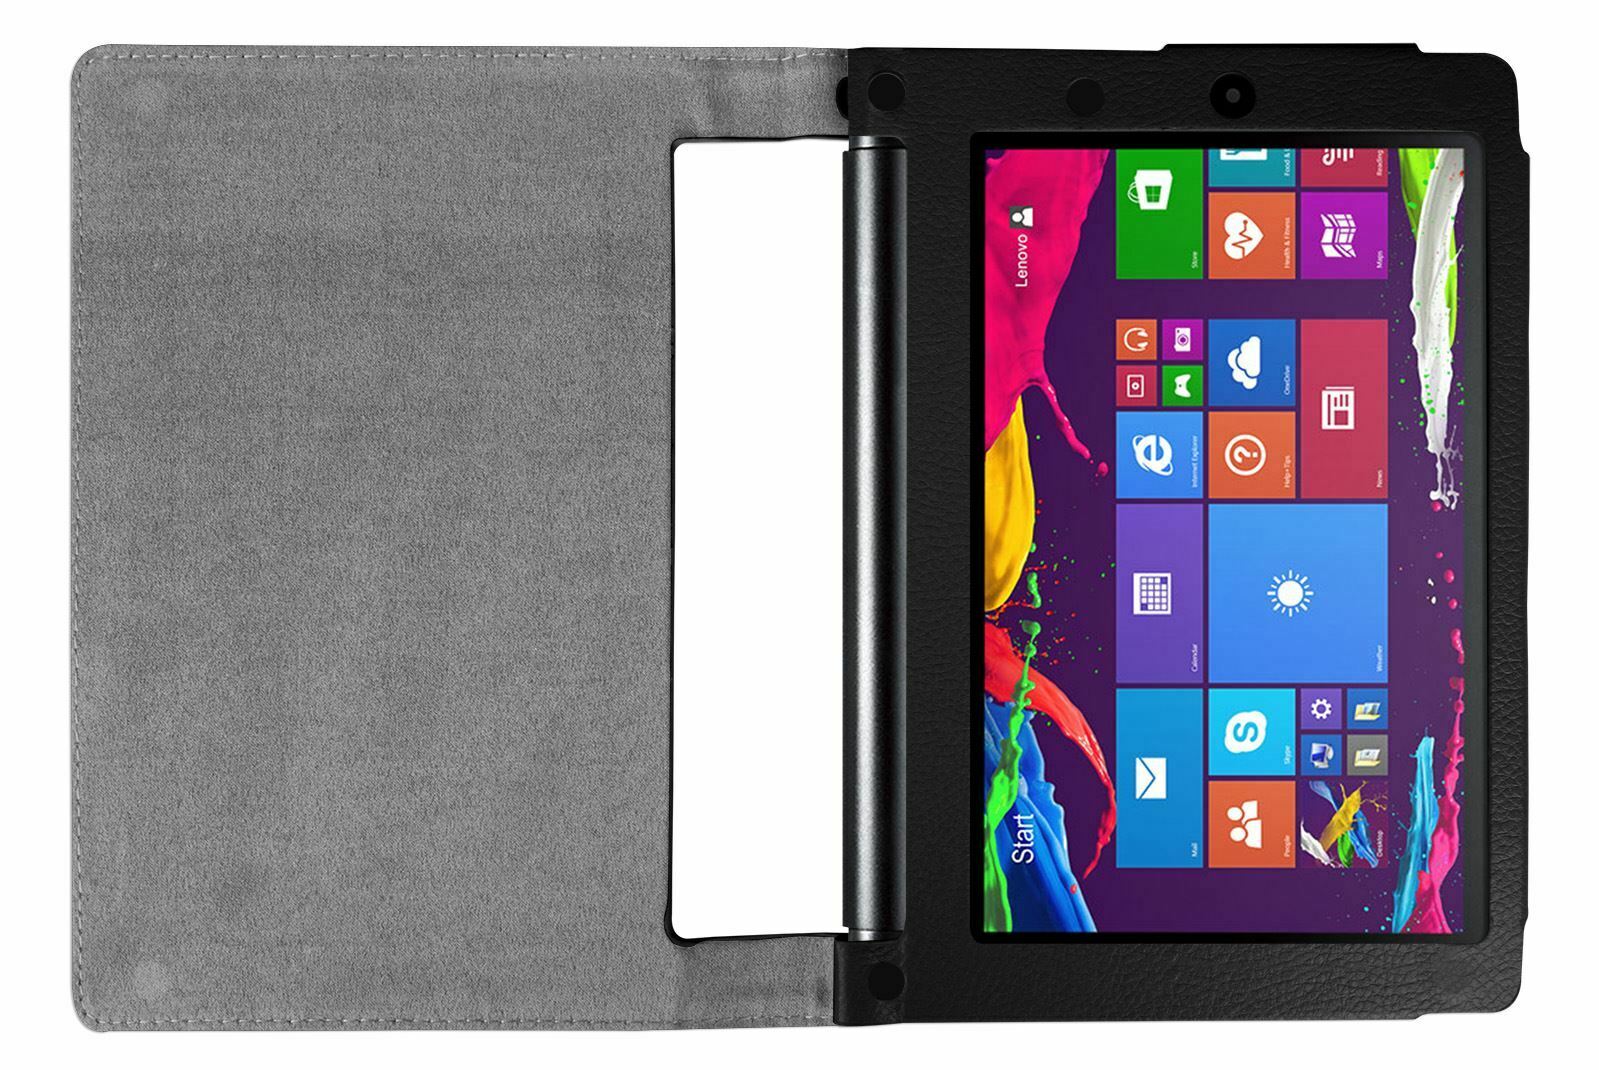 Černé kožené pouzdro / obal pro tablet Lenovo Yoga 2 10